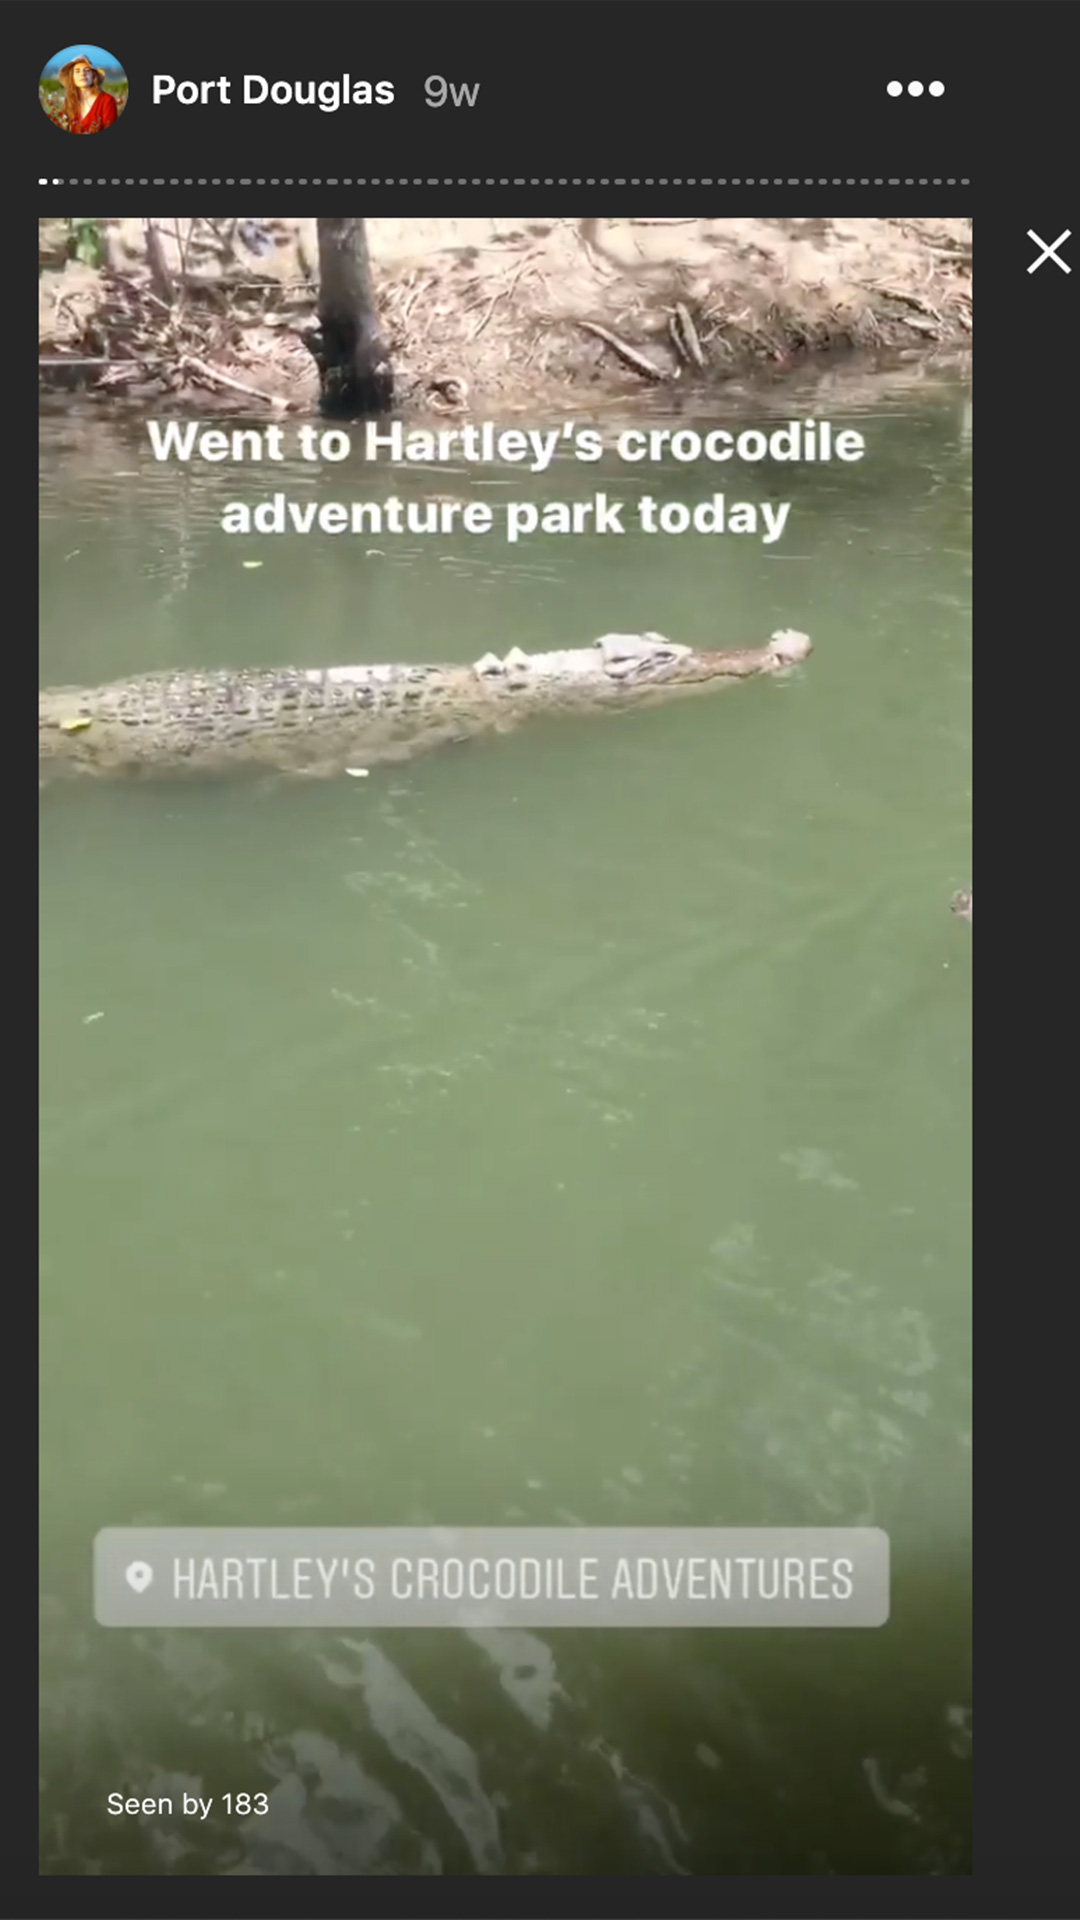 salt water crocodile at hartley's adventure park in port douglas in australia